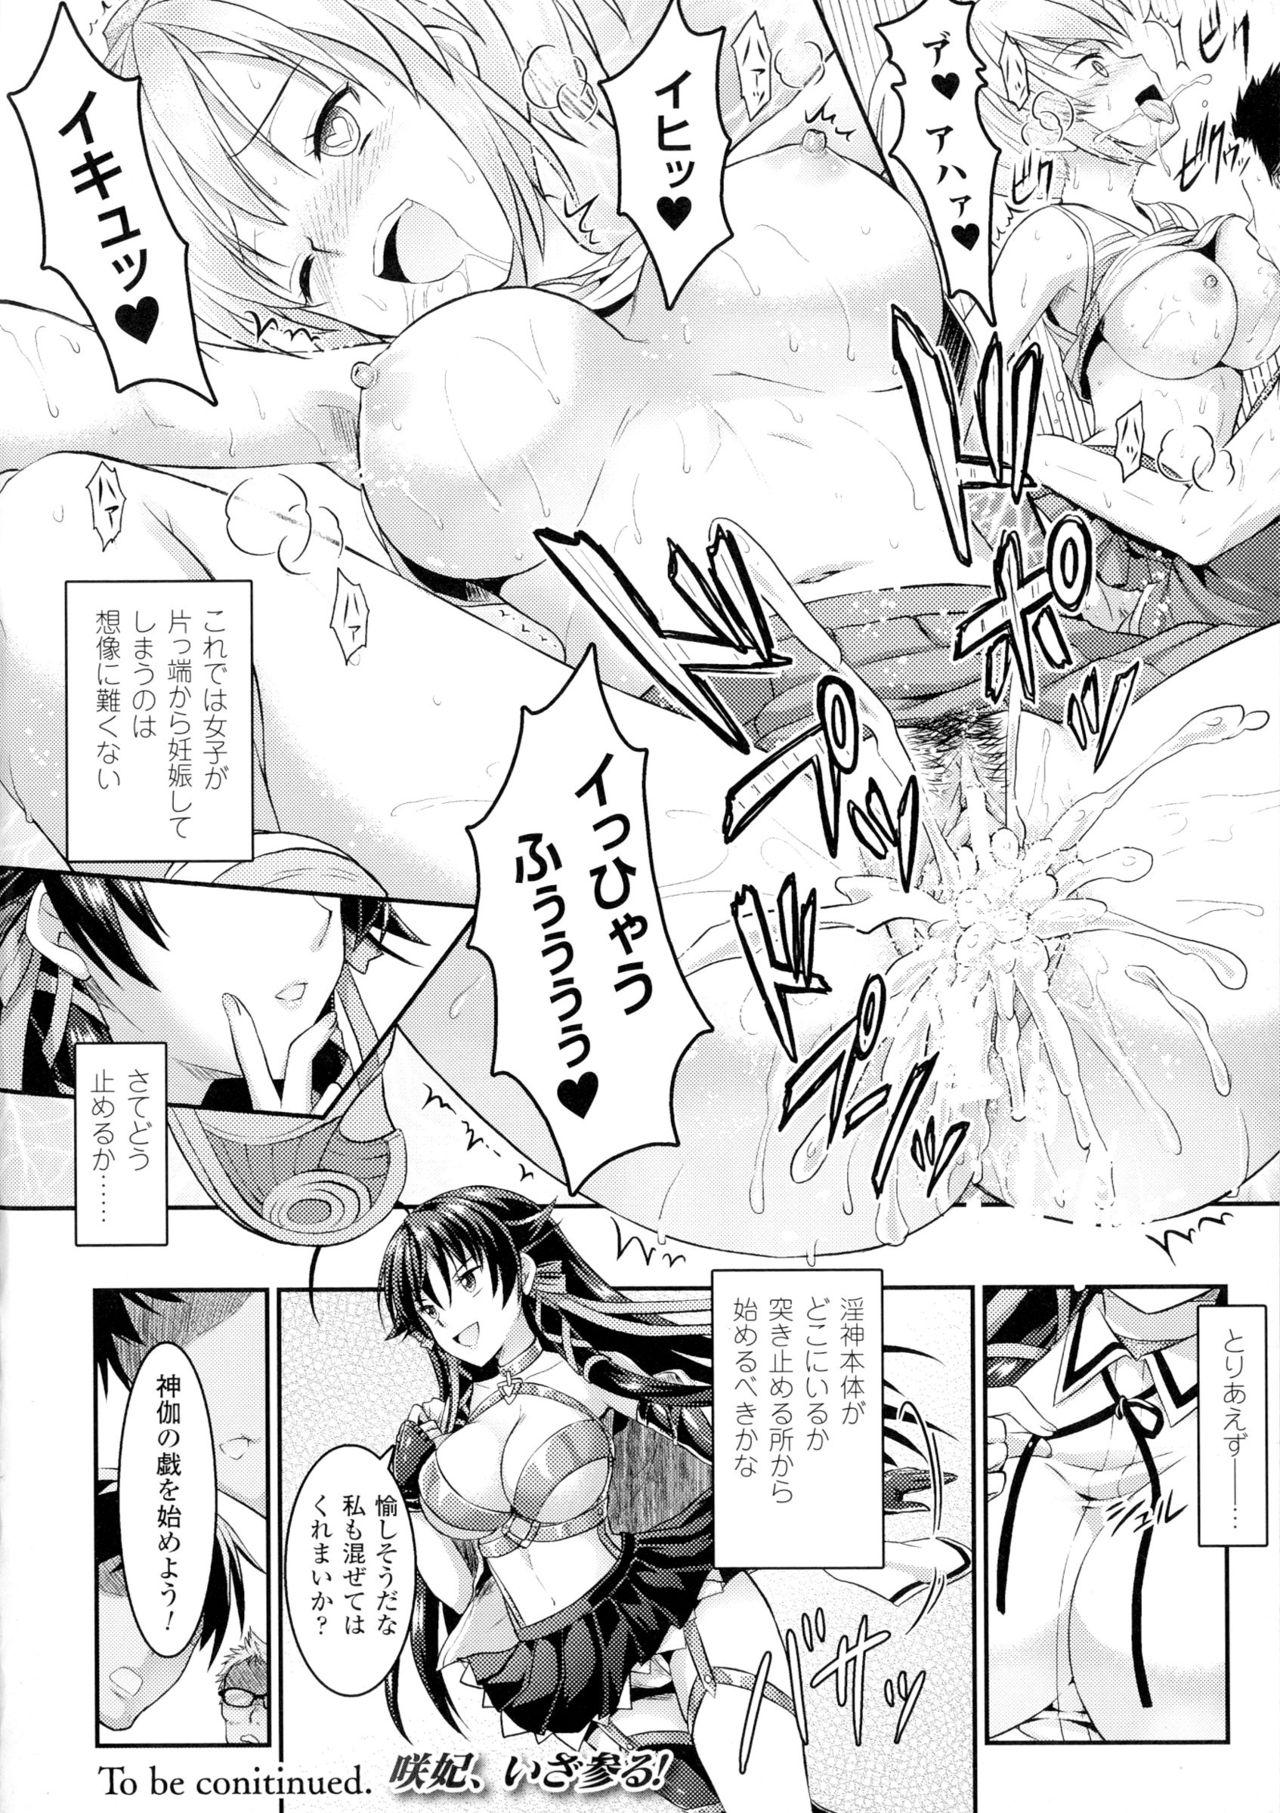 Seigi no Heroine Kangoku File DX Vol. 1 26